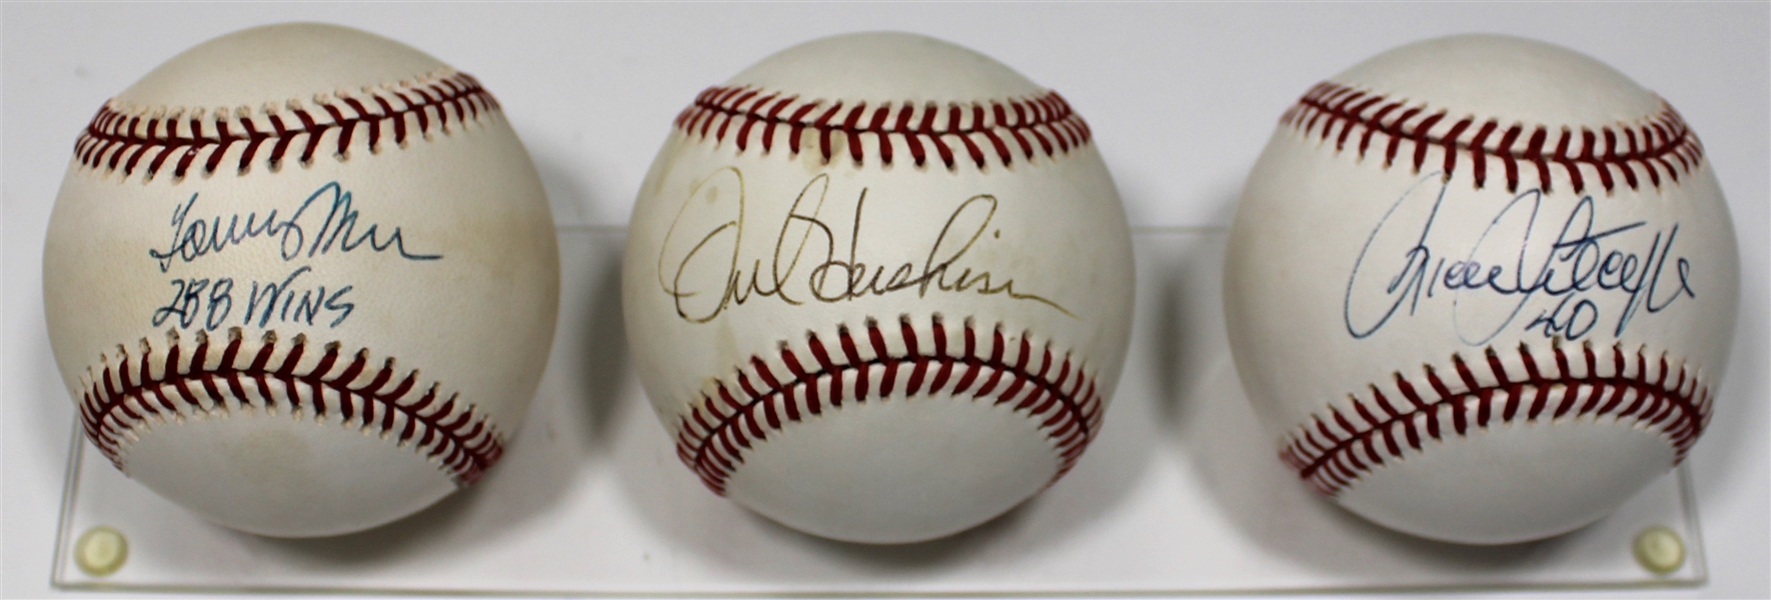 Rick Suttcliffe- Orel Hershiser - Tommy John Signed Baseballs - JSA